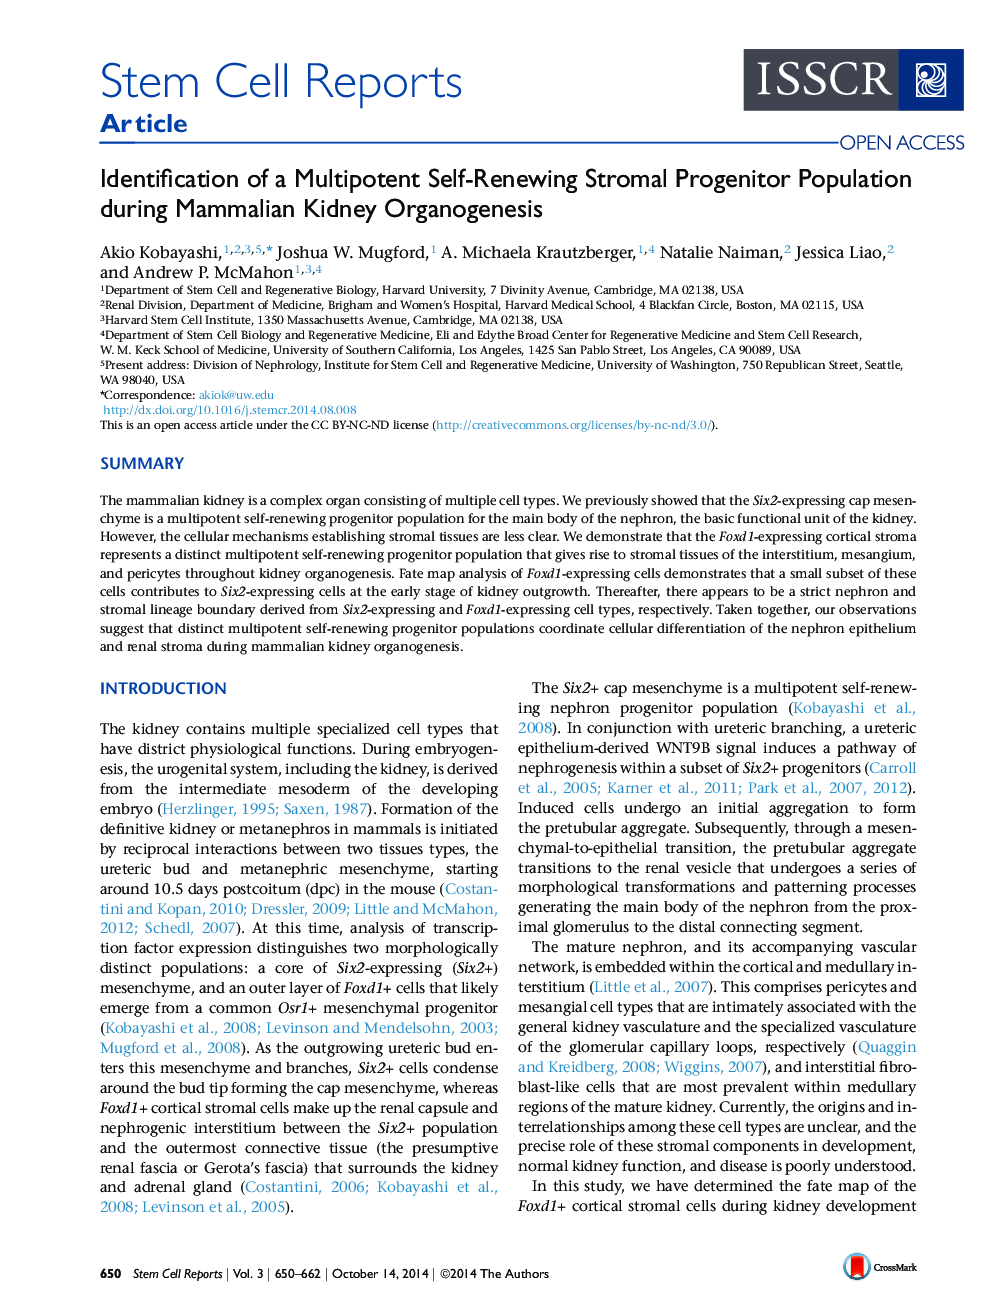 Identification of a Multipotent Self-Renewing Stromal Progenitor Population during Mammalian Kidney Organogenesis 